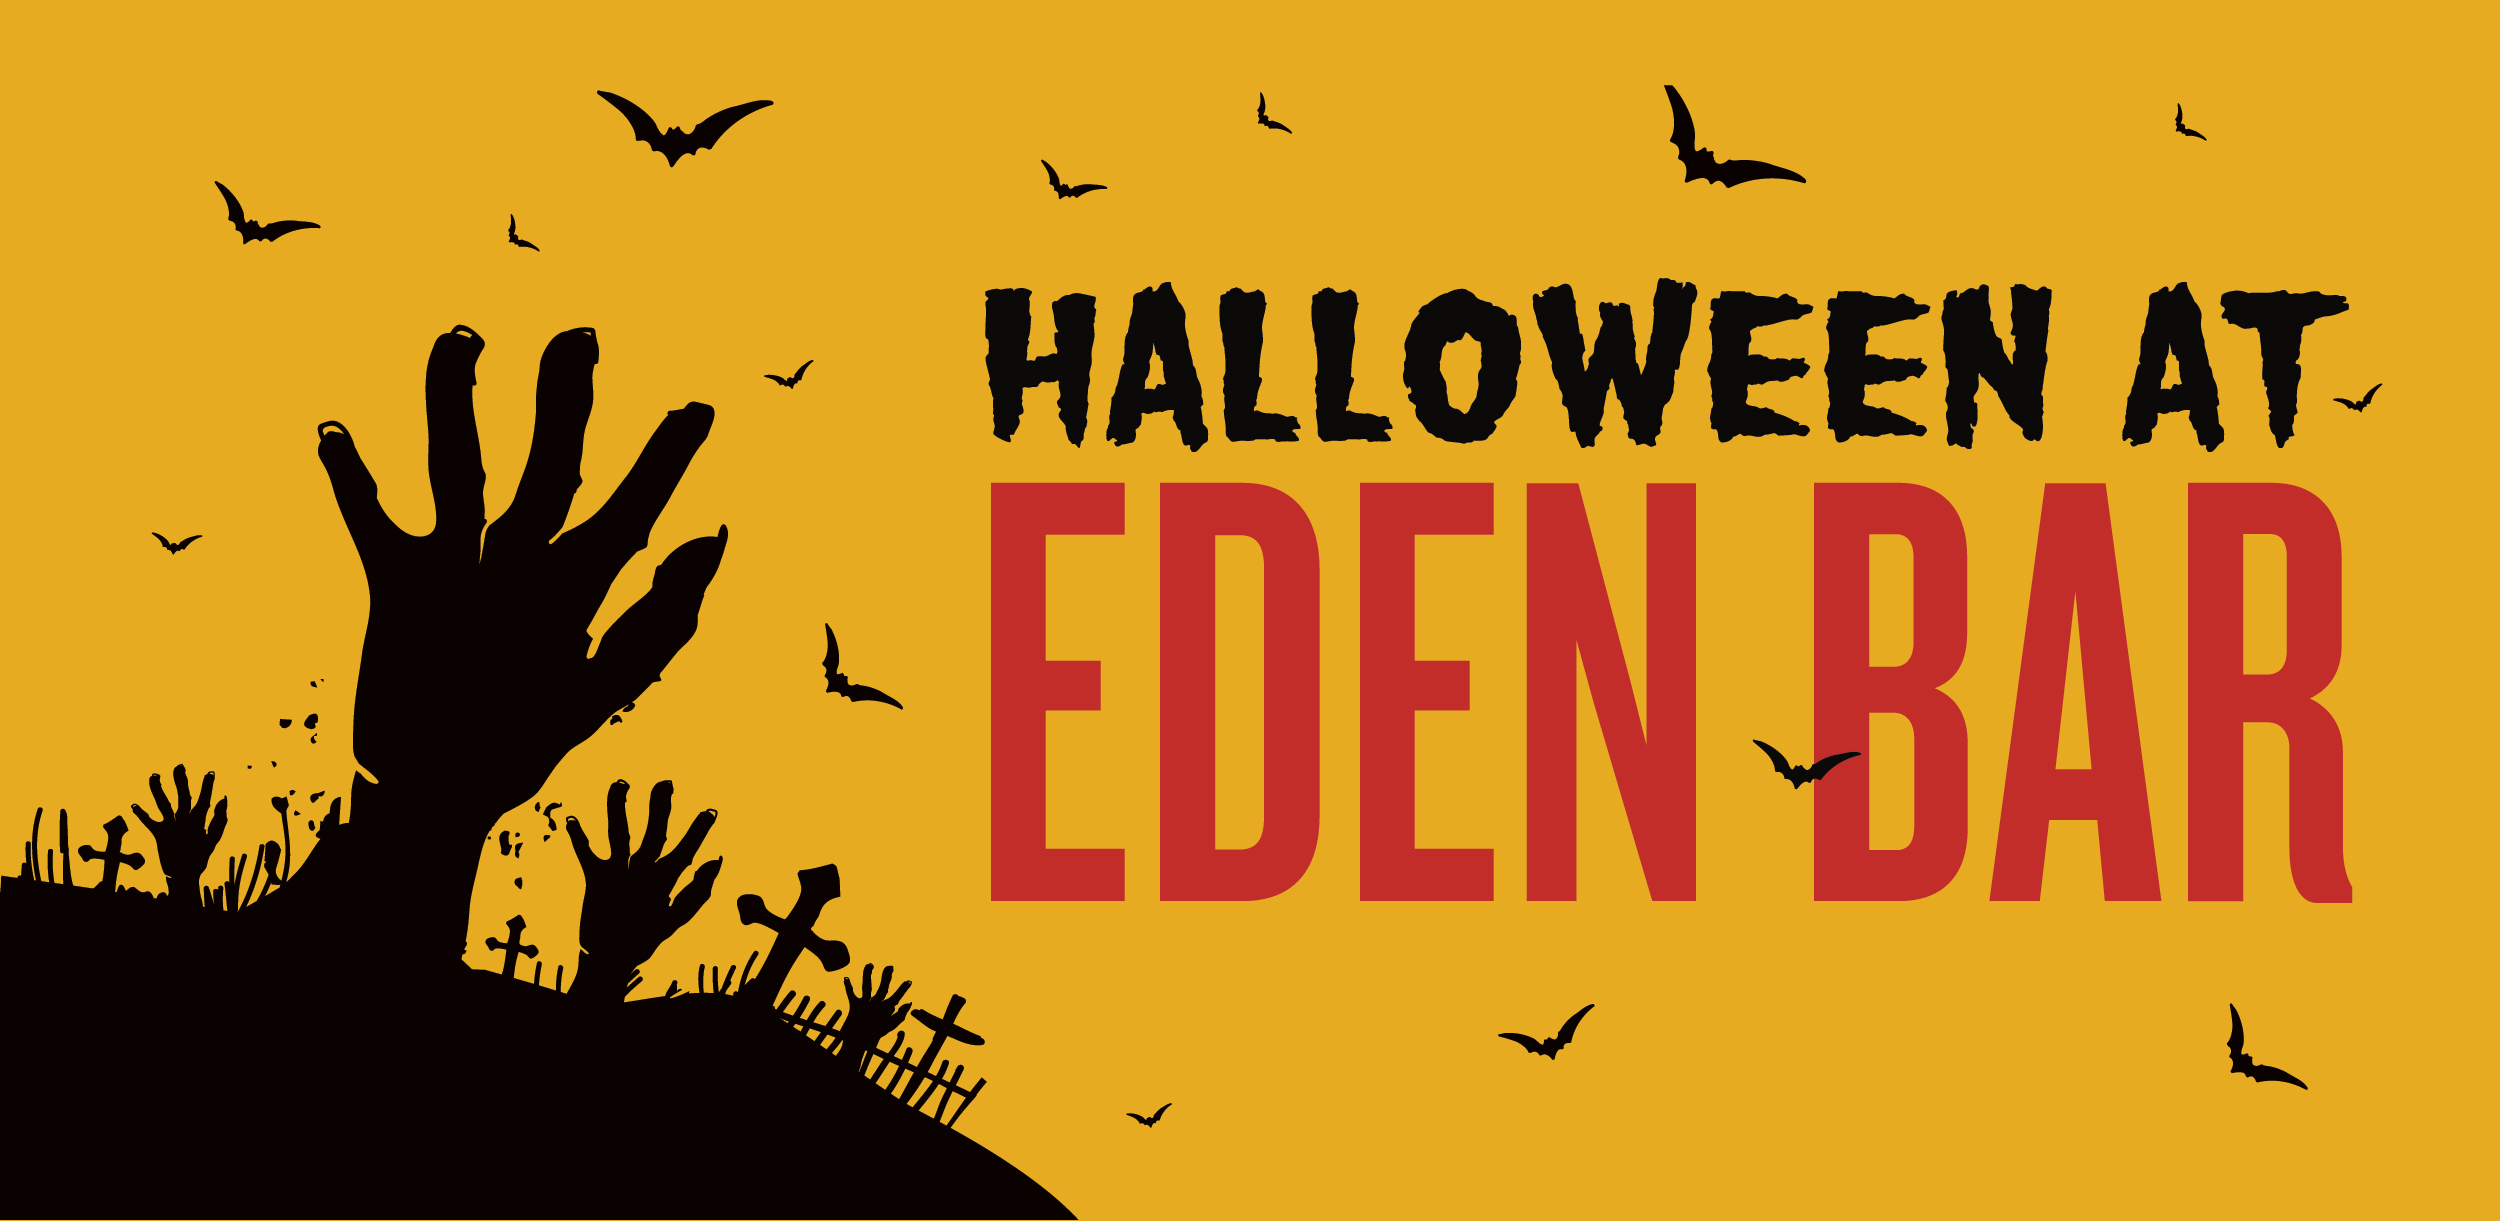 Eden Bar’s Halloween Party